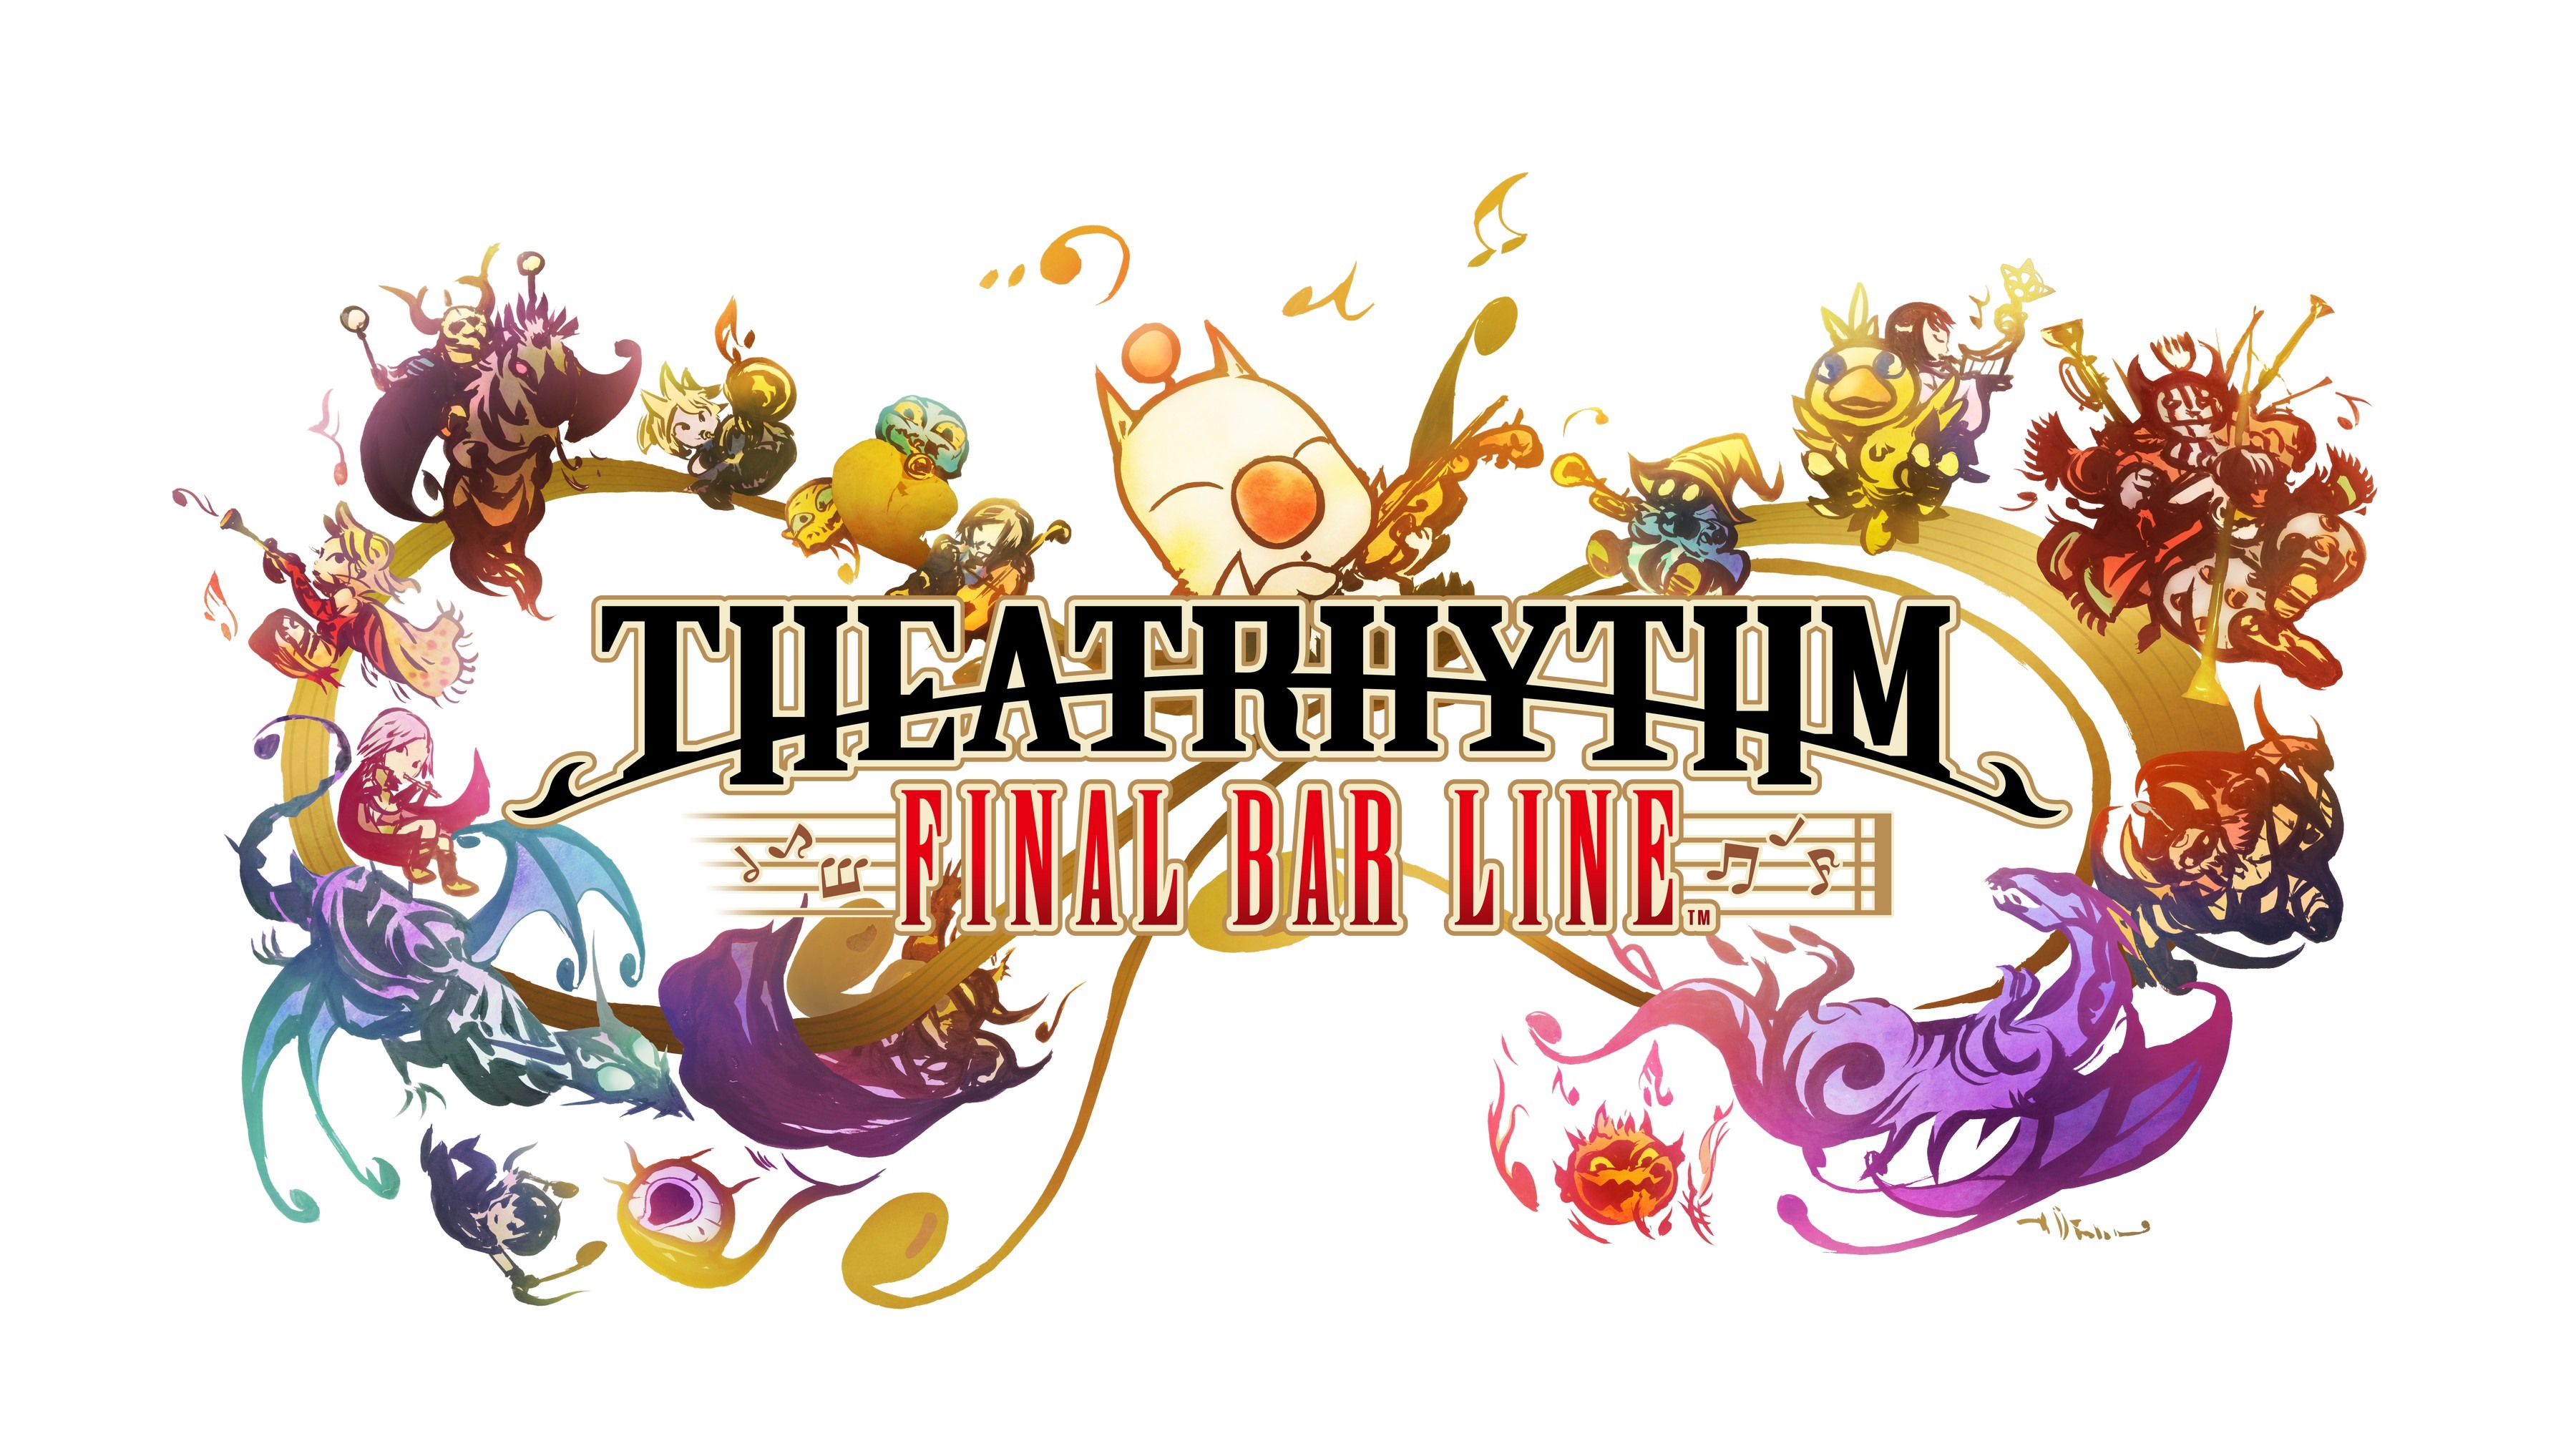 《TheatRhythm Final Bar Line》体验版开放下载 电玩展特别节目周日登场插图